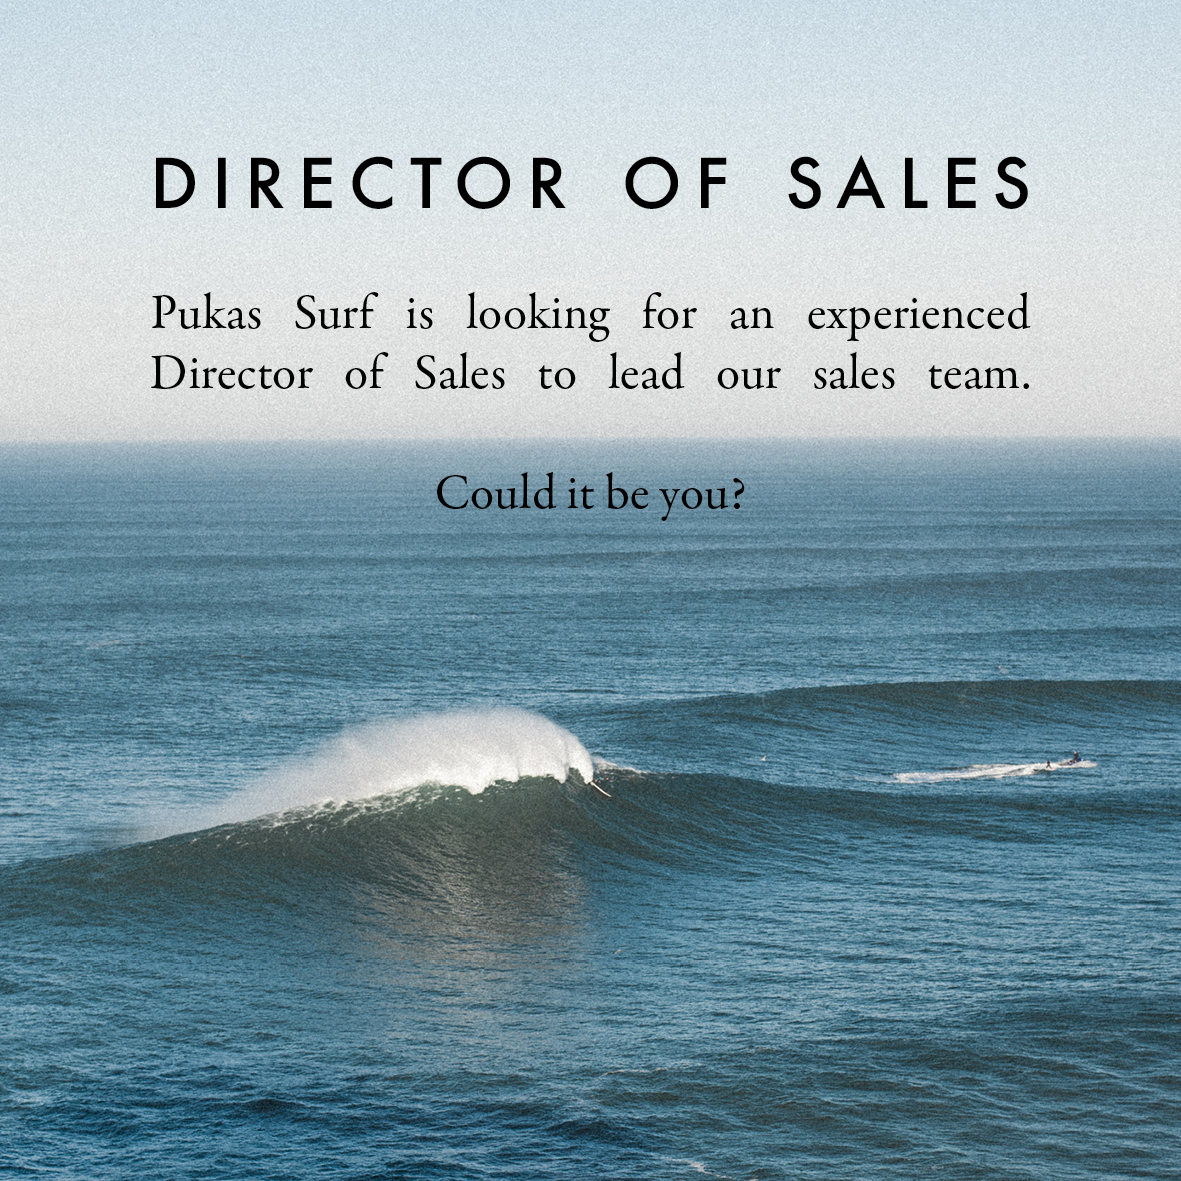 Pukas Director of Sales